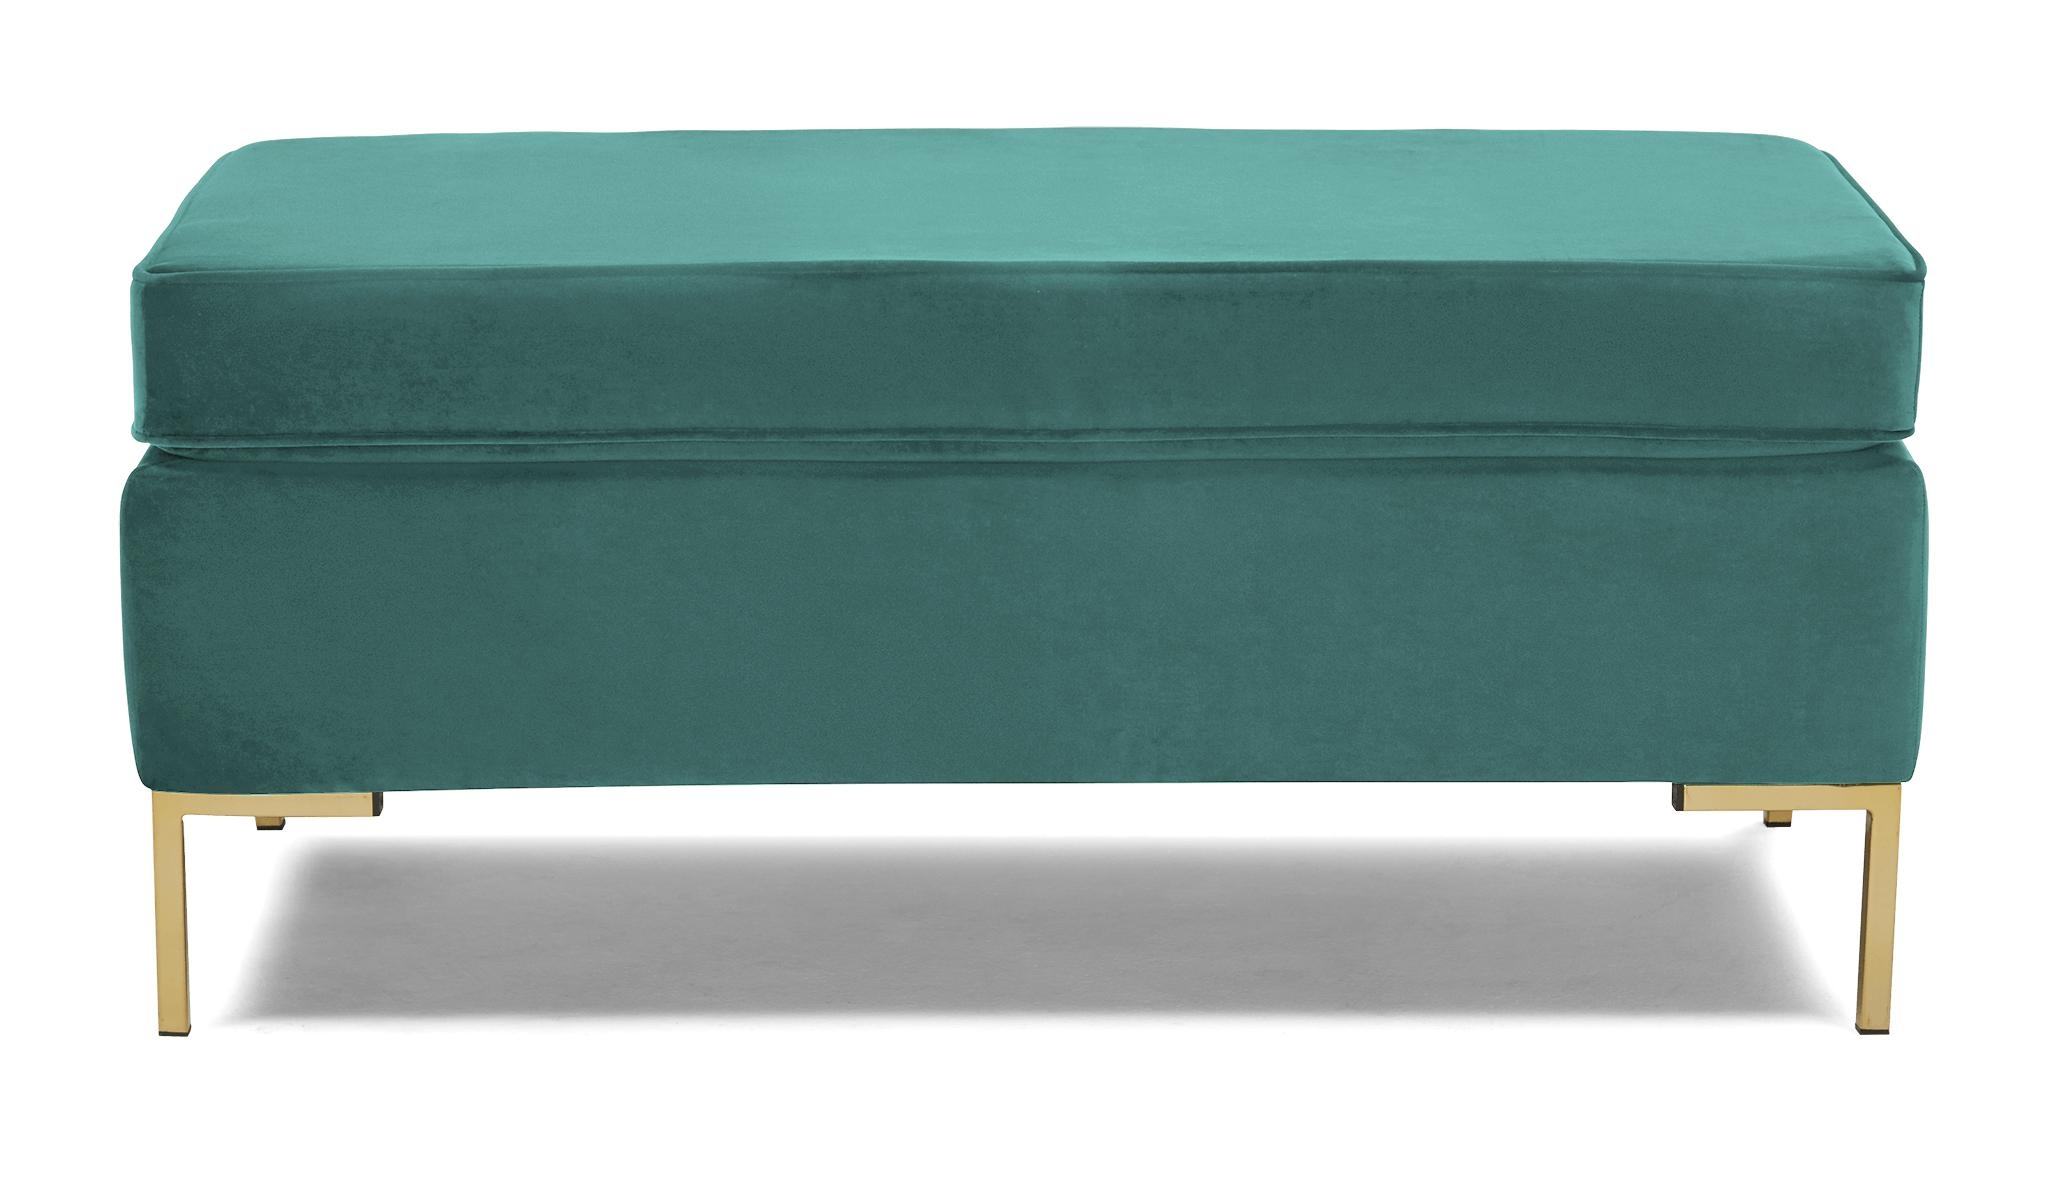 Green Dee Mid Century Modern Bench with Storage - Essence Aqua - Image 0